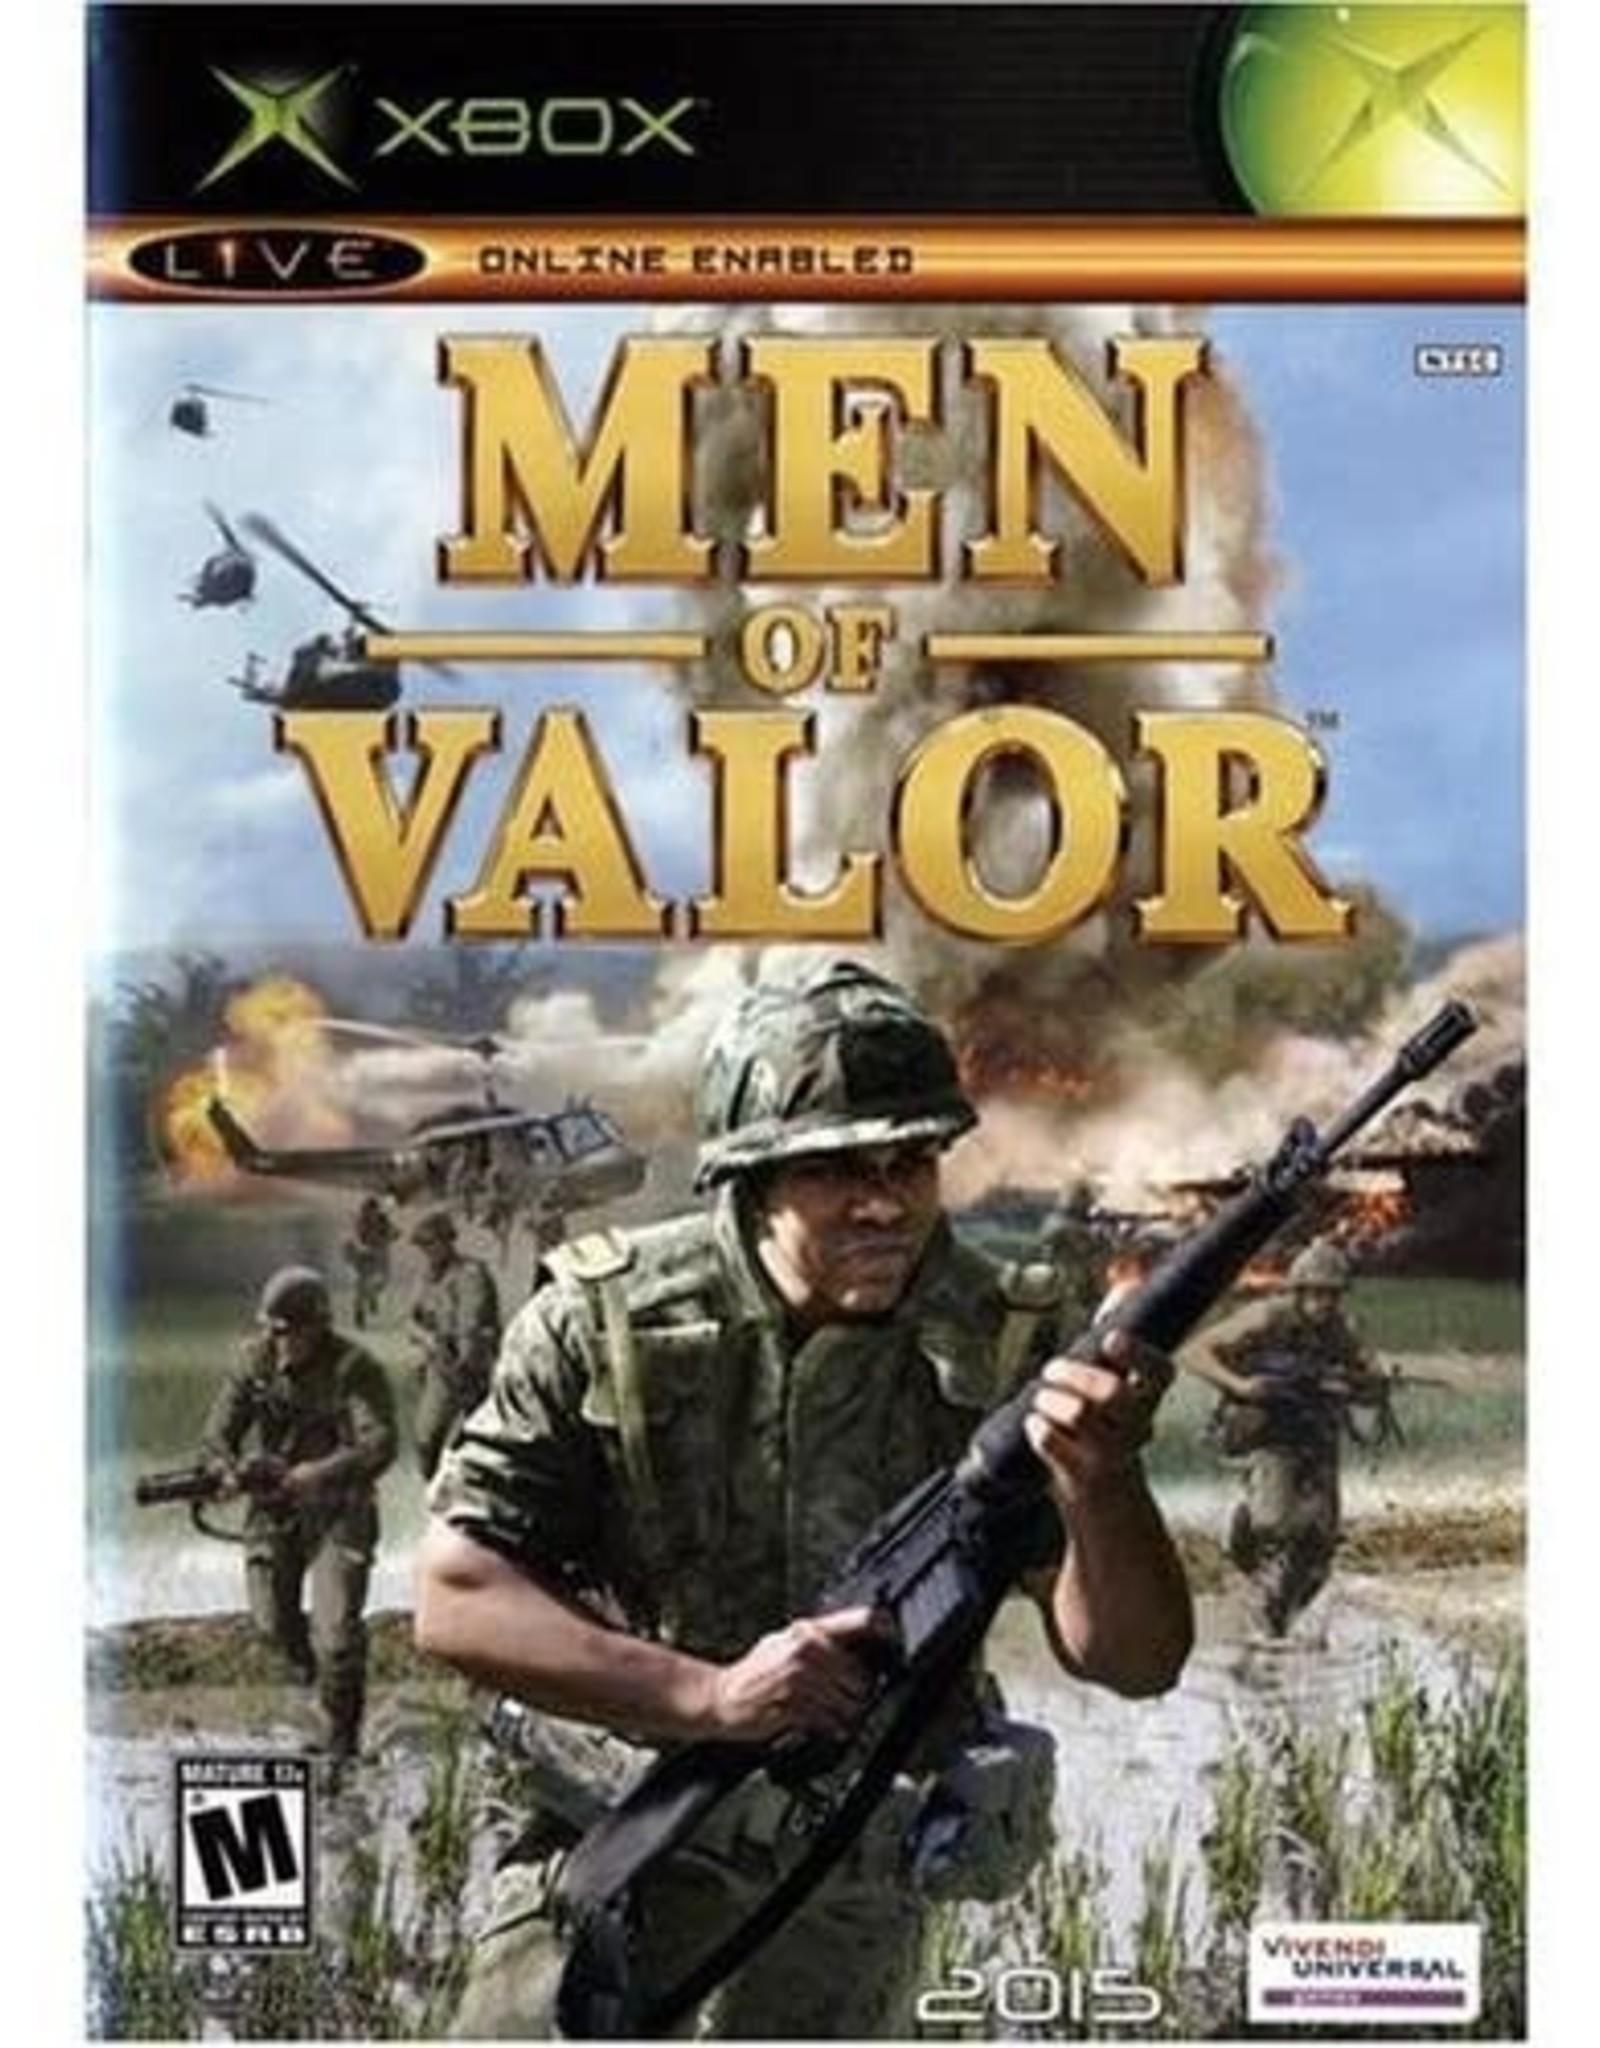 Xbox Men of Valor (No Manual)